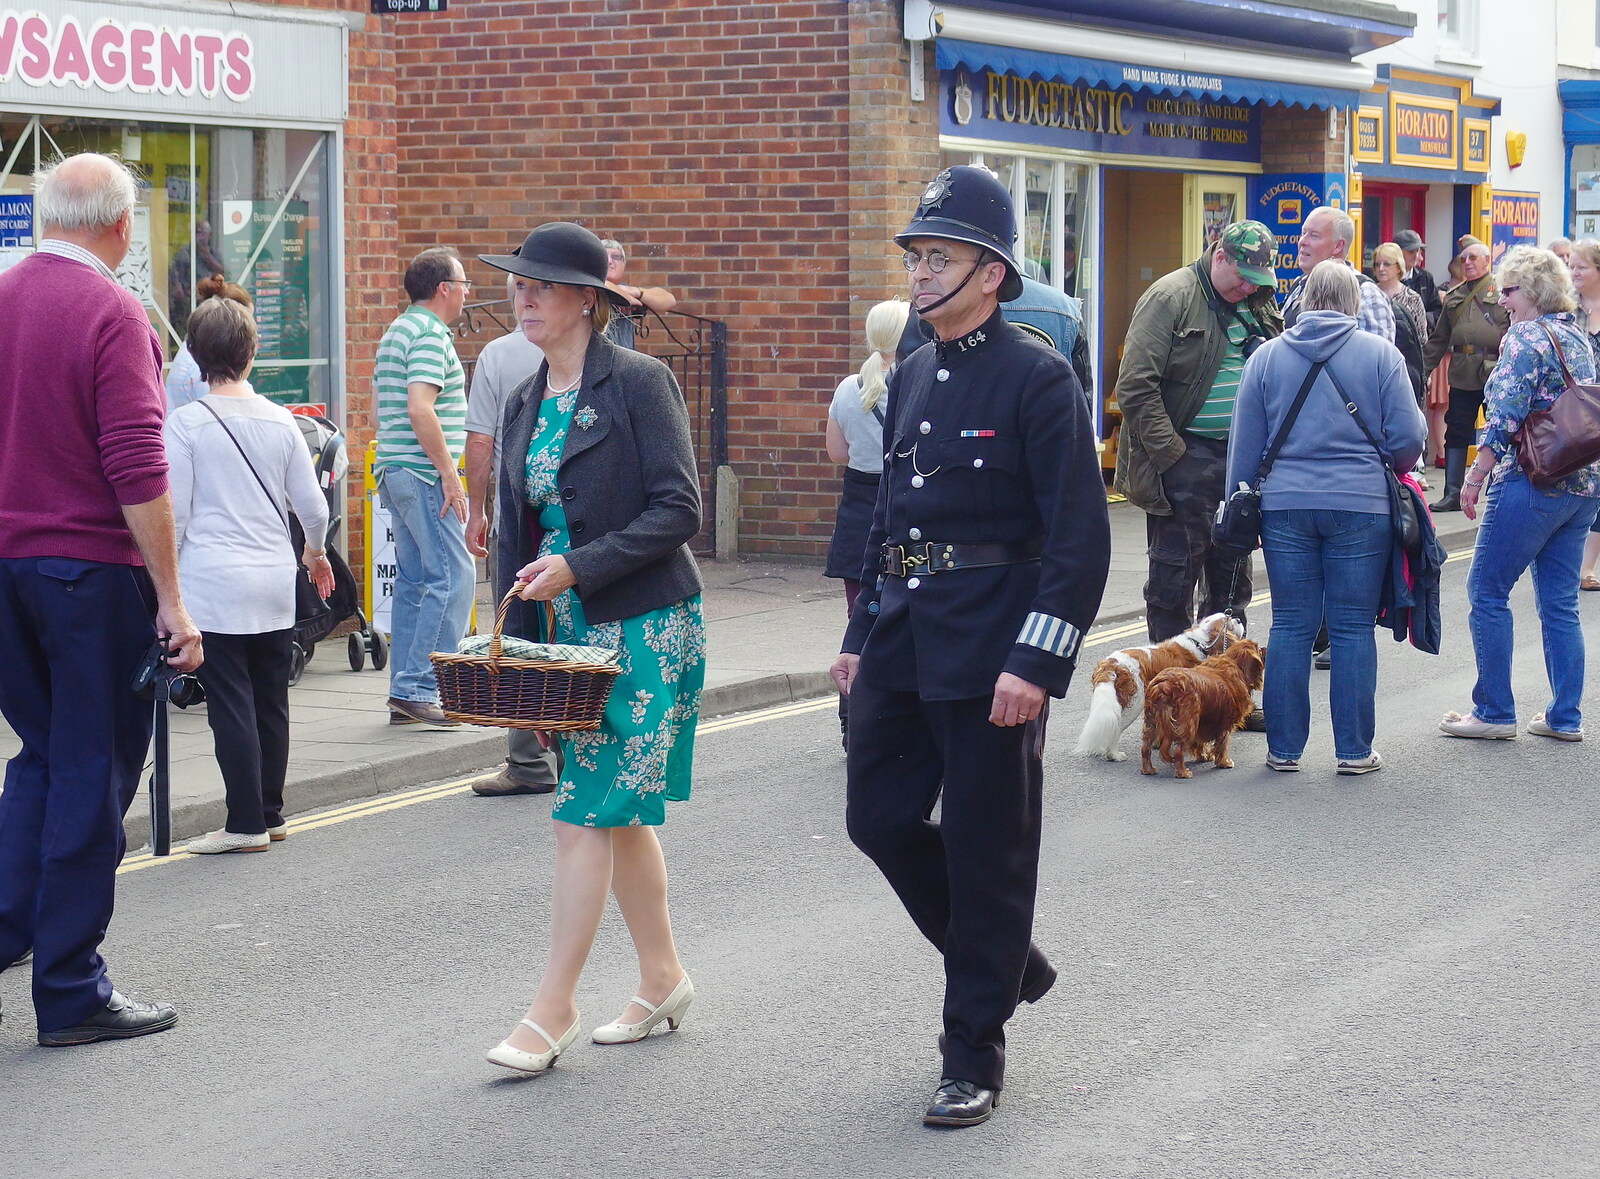 A wartime policeman from Paul Bear's Adventures at a 1940s Steam Weekend, Holt, Norfolk - 22nd September 2013